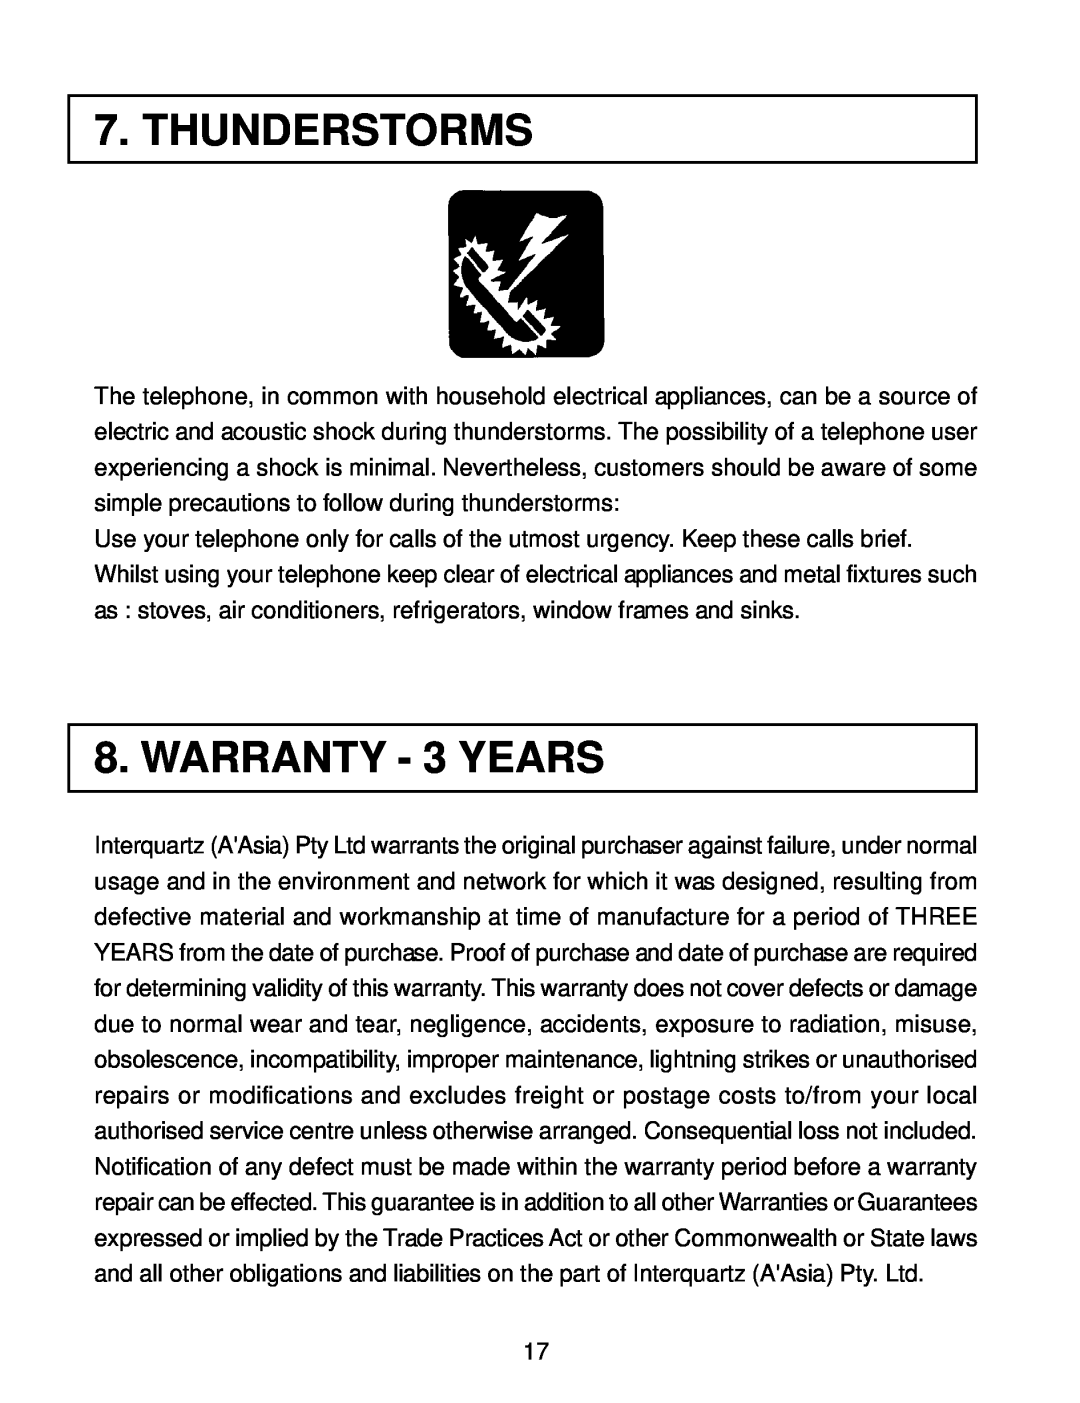 Interquartz IQ331 manual Thunderstorms, WARRANTY - 3 YEARS 